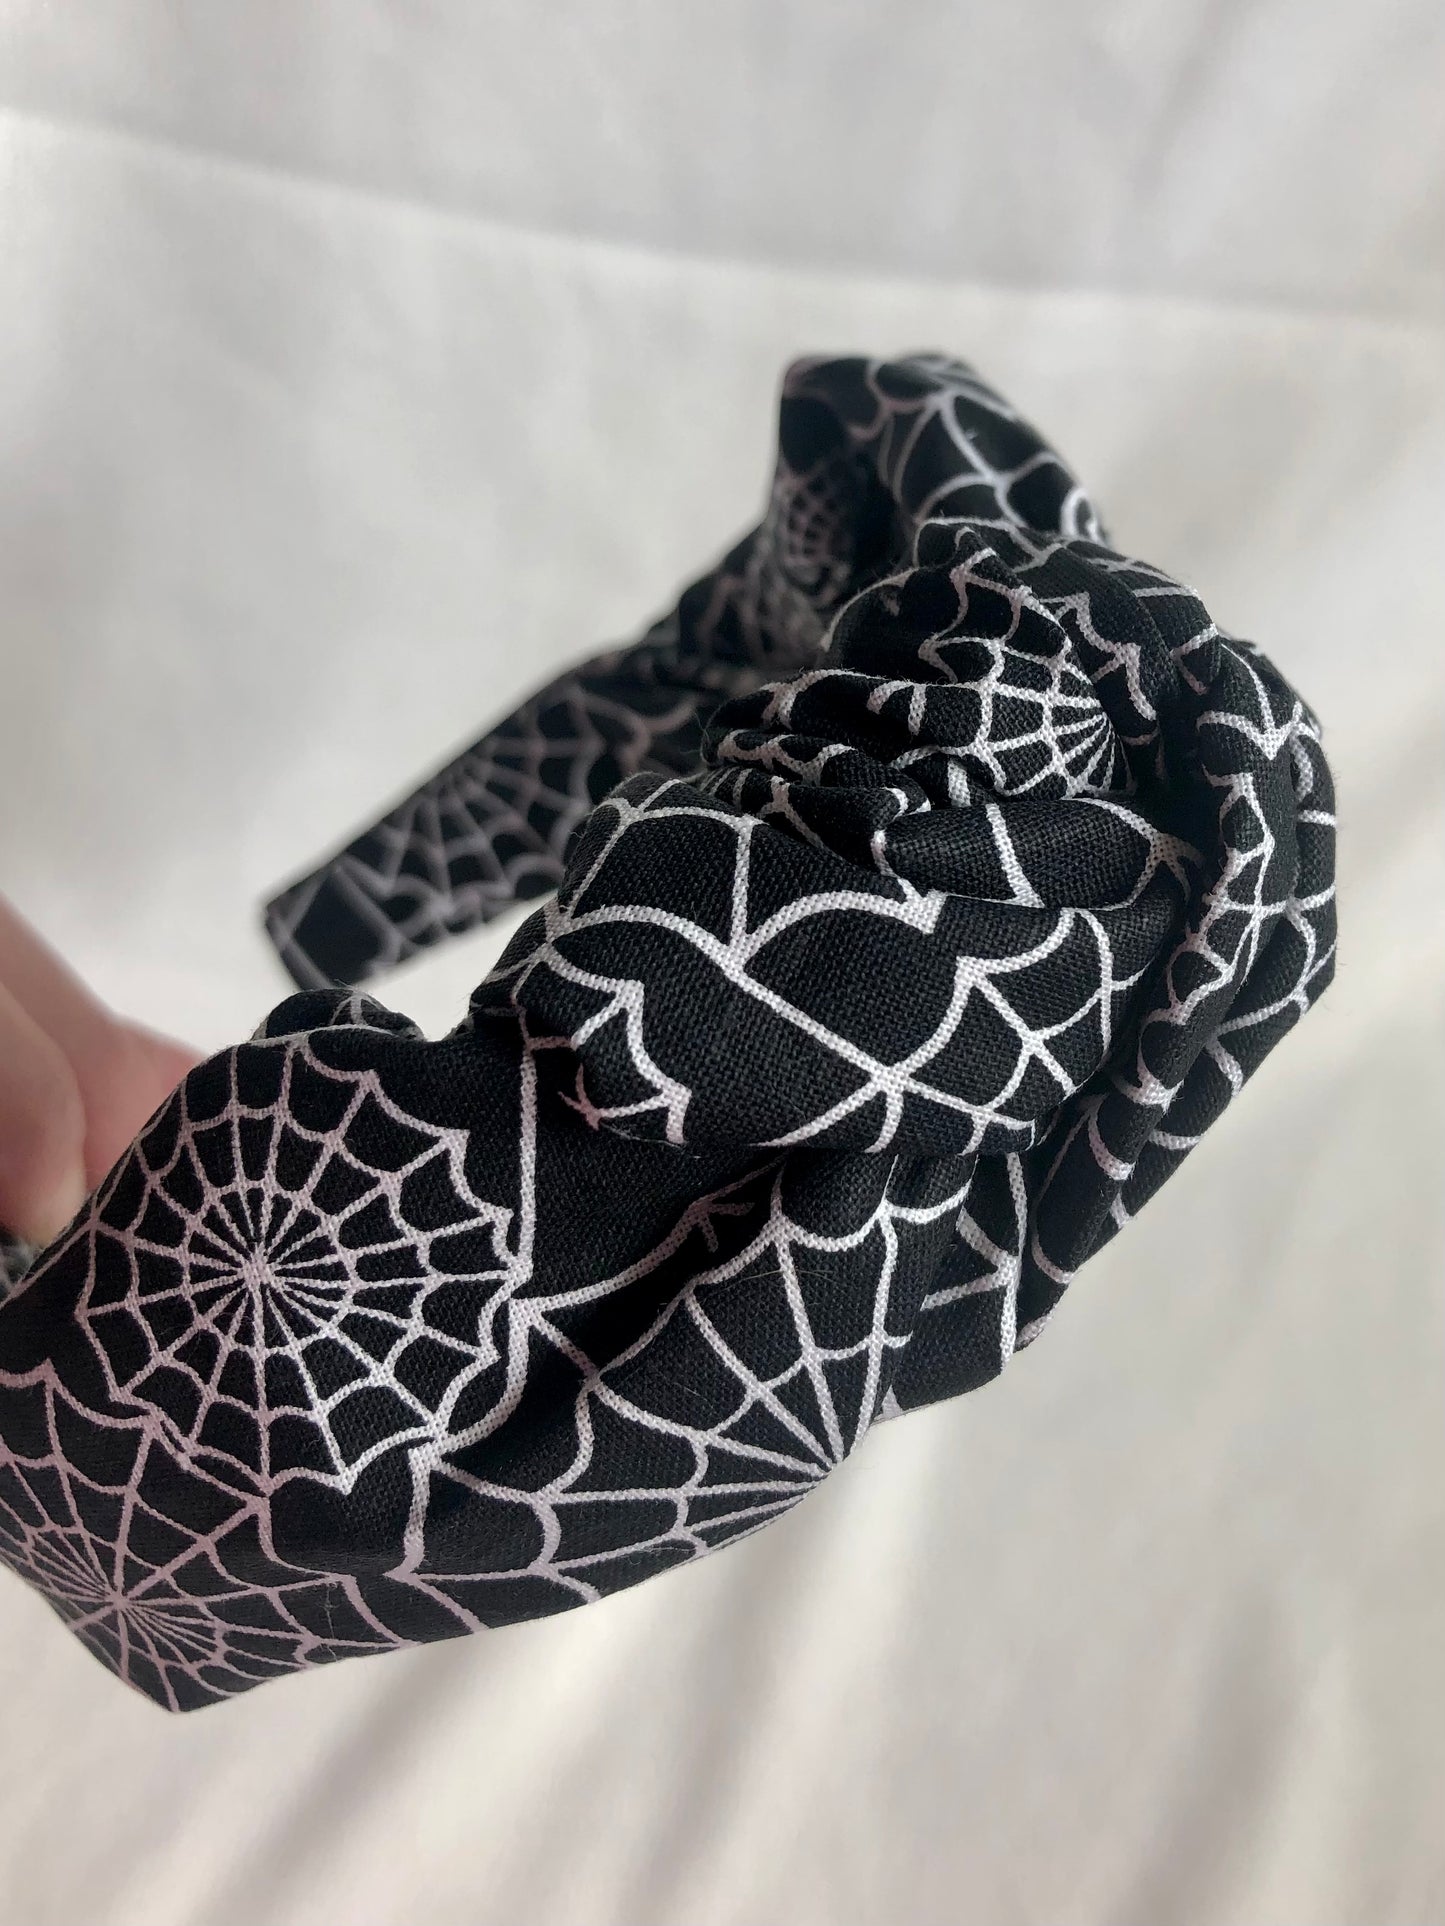 Black and White Spiderwebs Headband - choose style